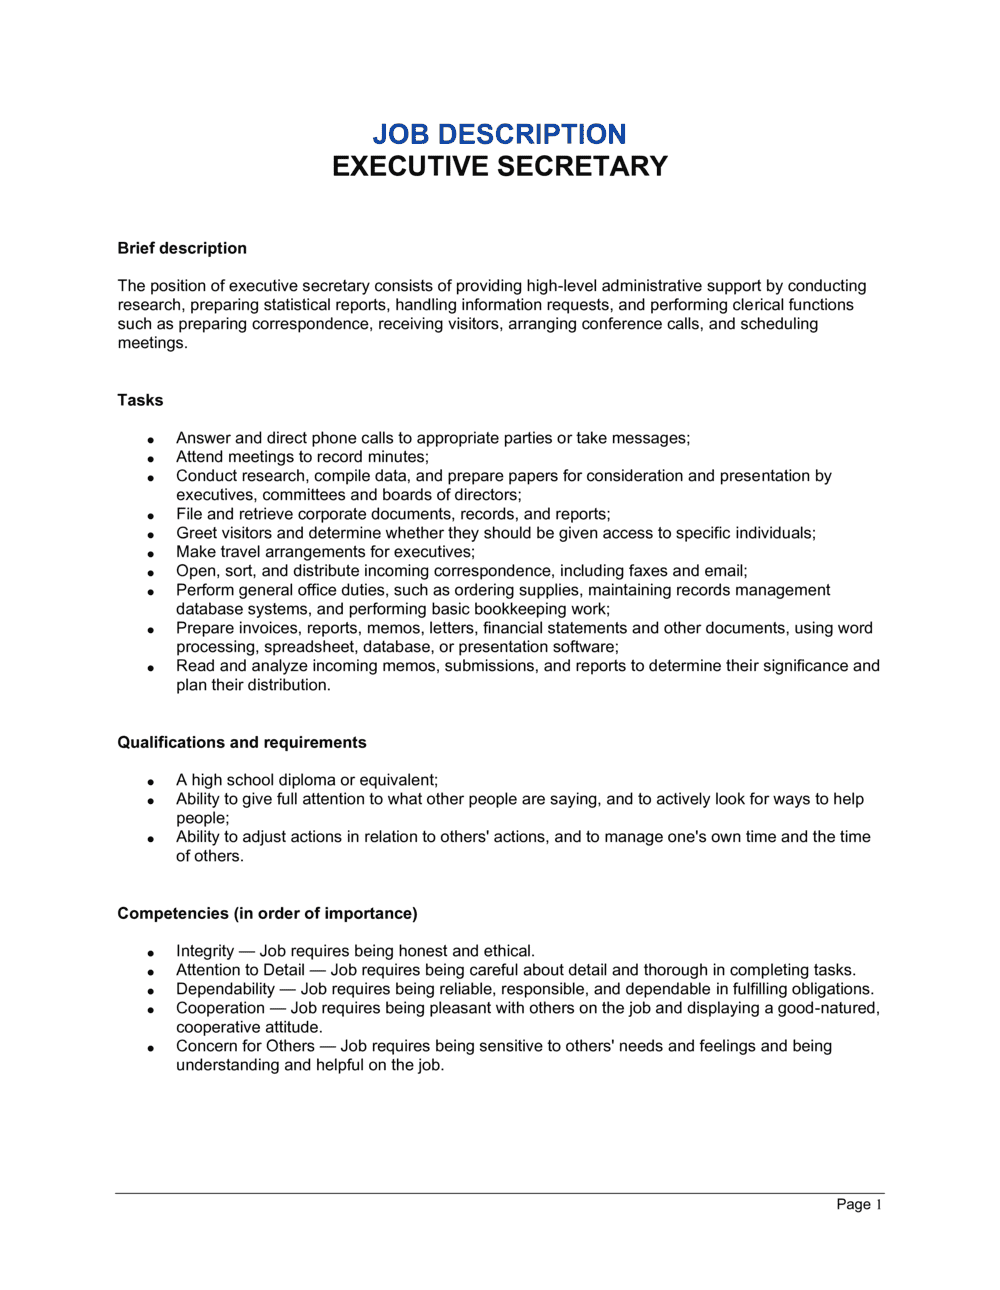 Executive Secretary Job Description Template by Business in a Box™